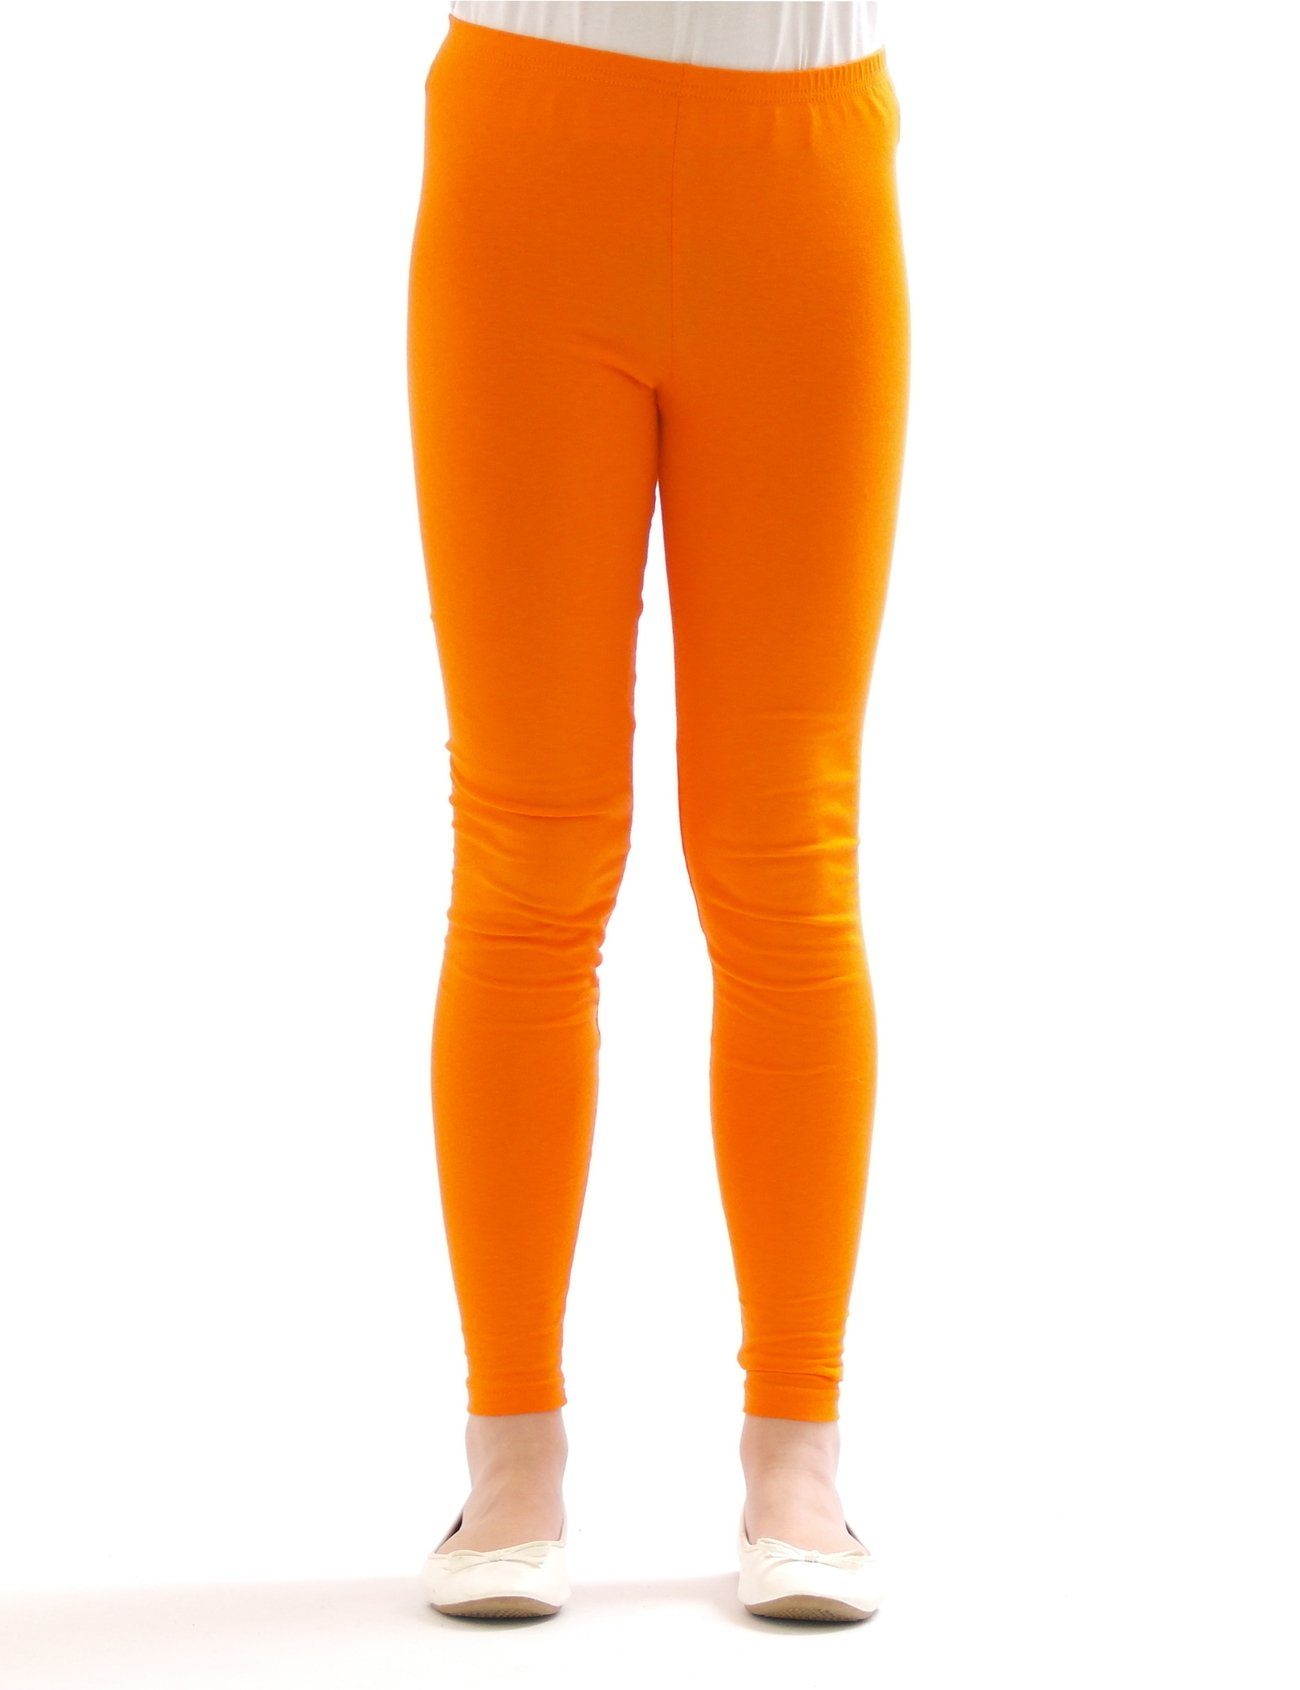 SYS Leggings Kinder Mädchen Leggings Hose lang blickdicht aus Baumwolle Baby Orange